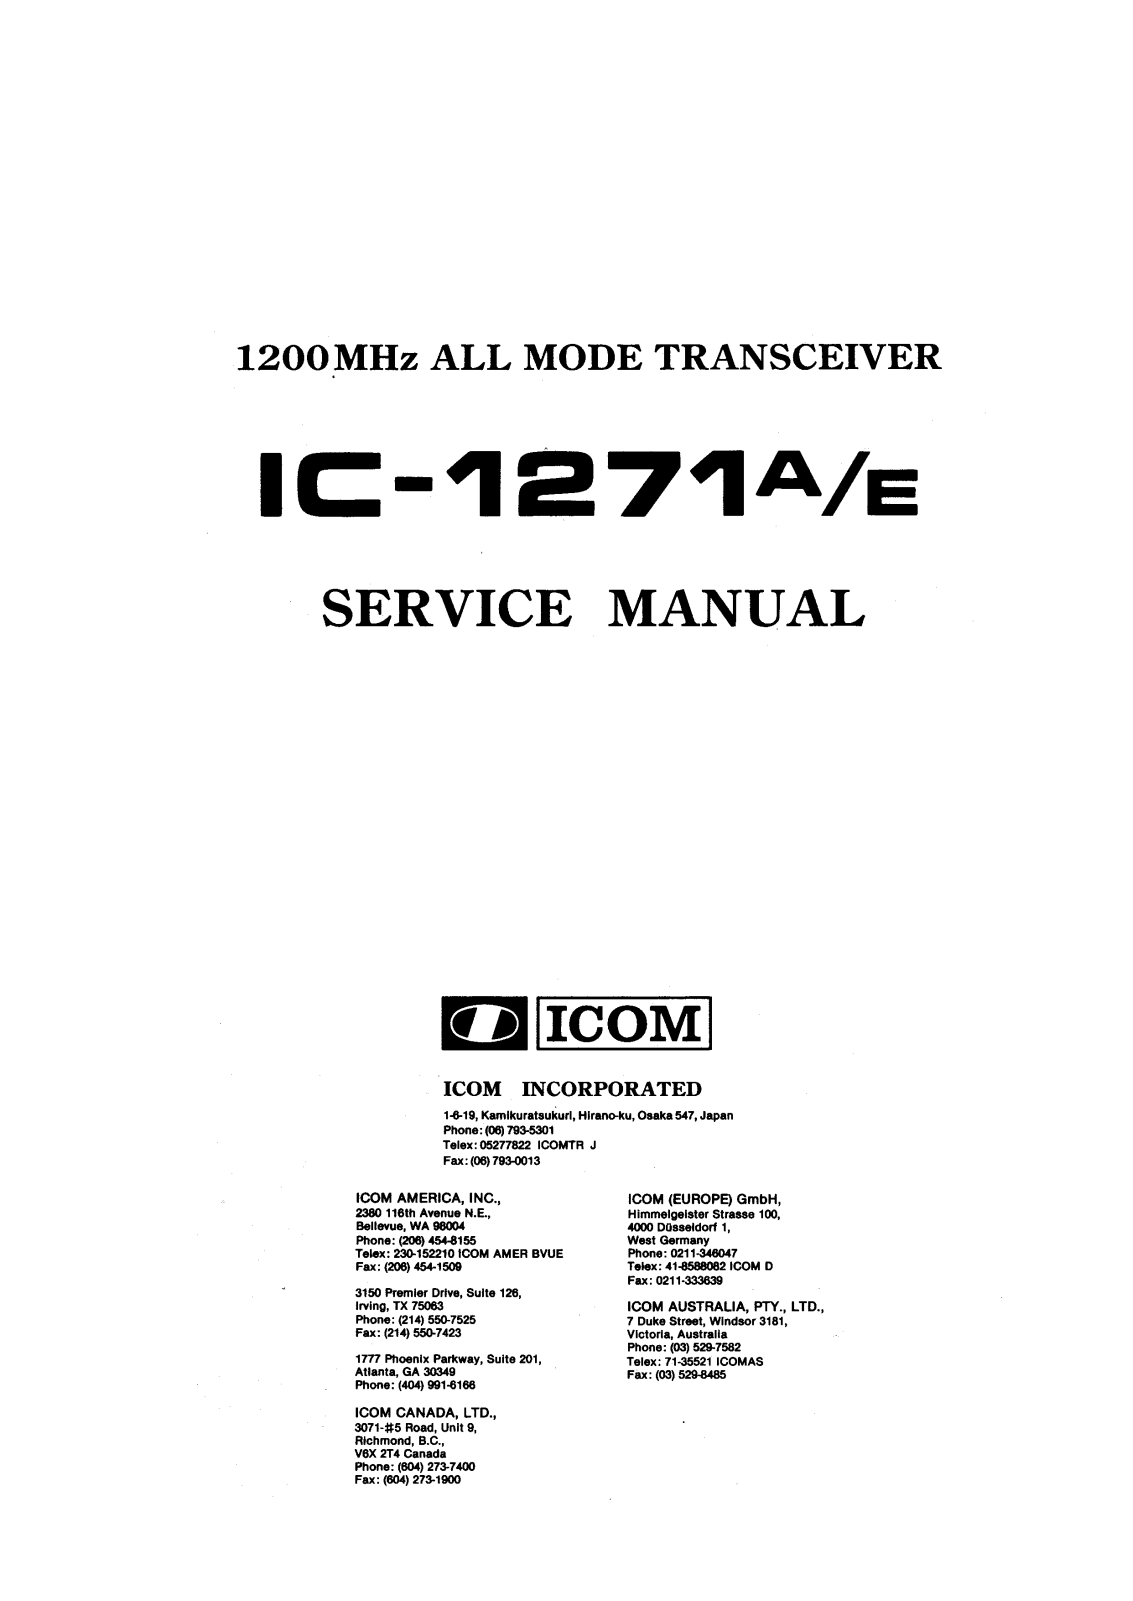 Icom ic 1271 schematic